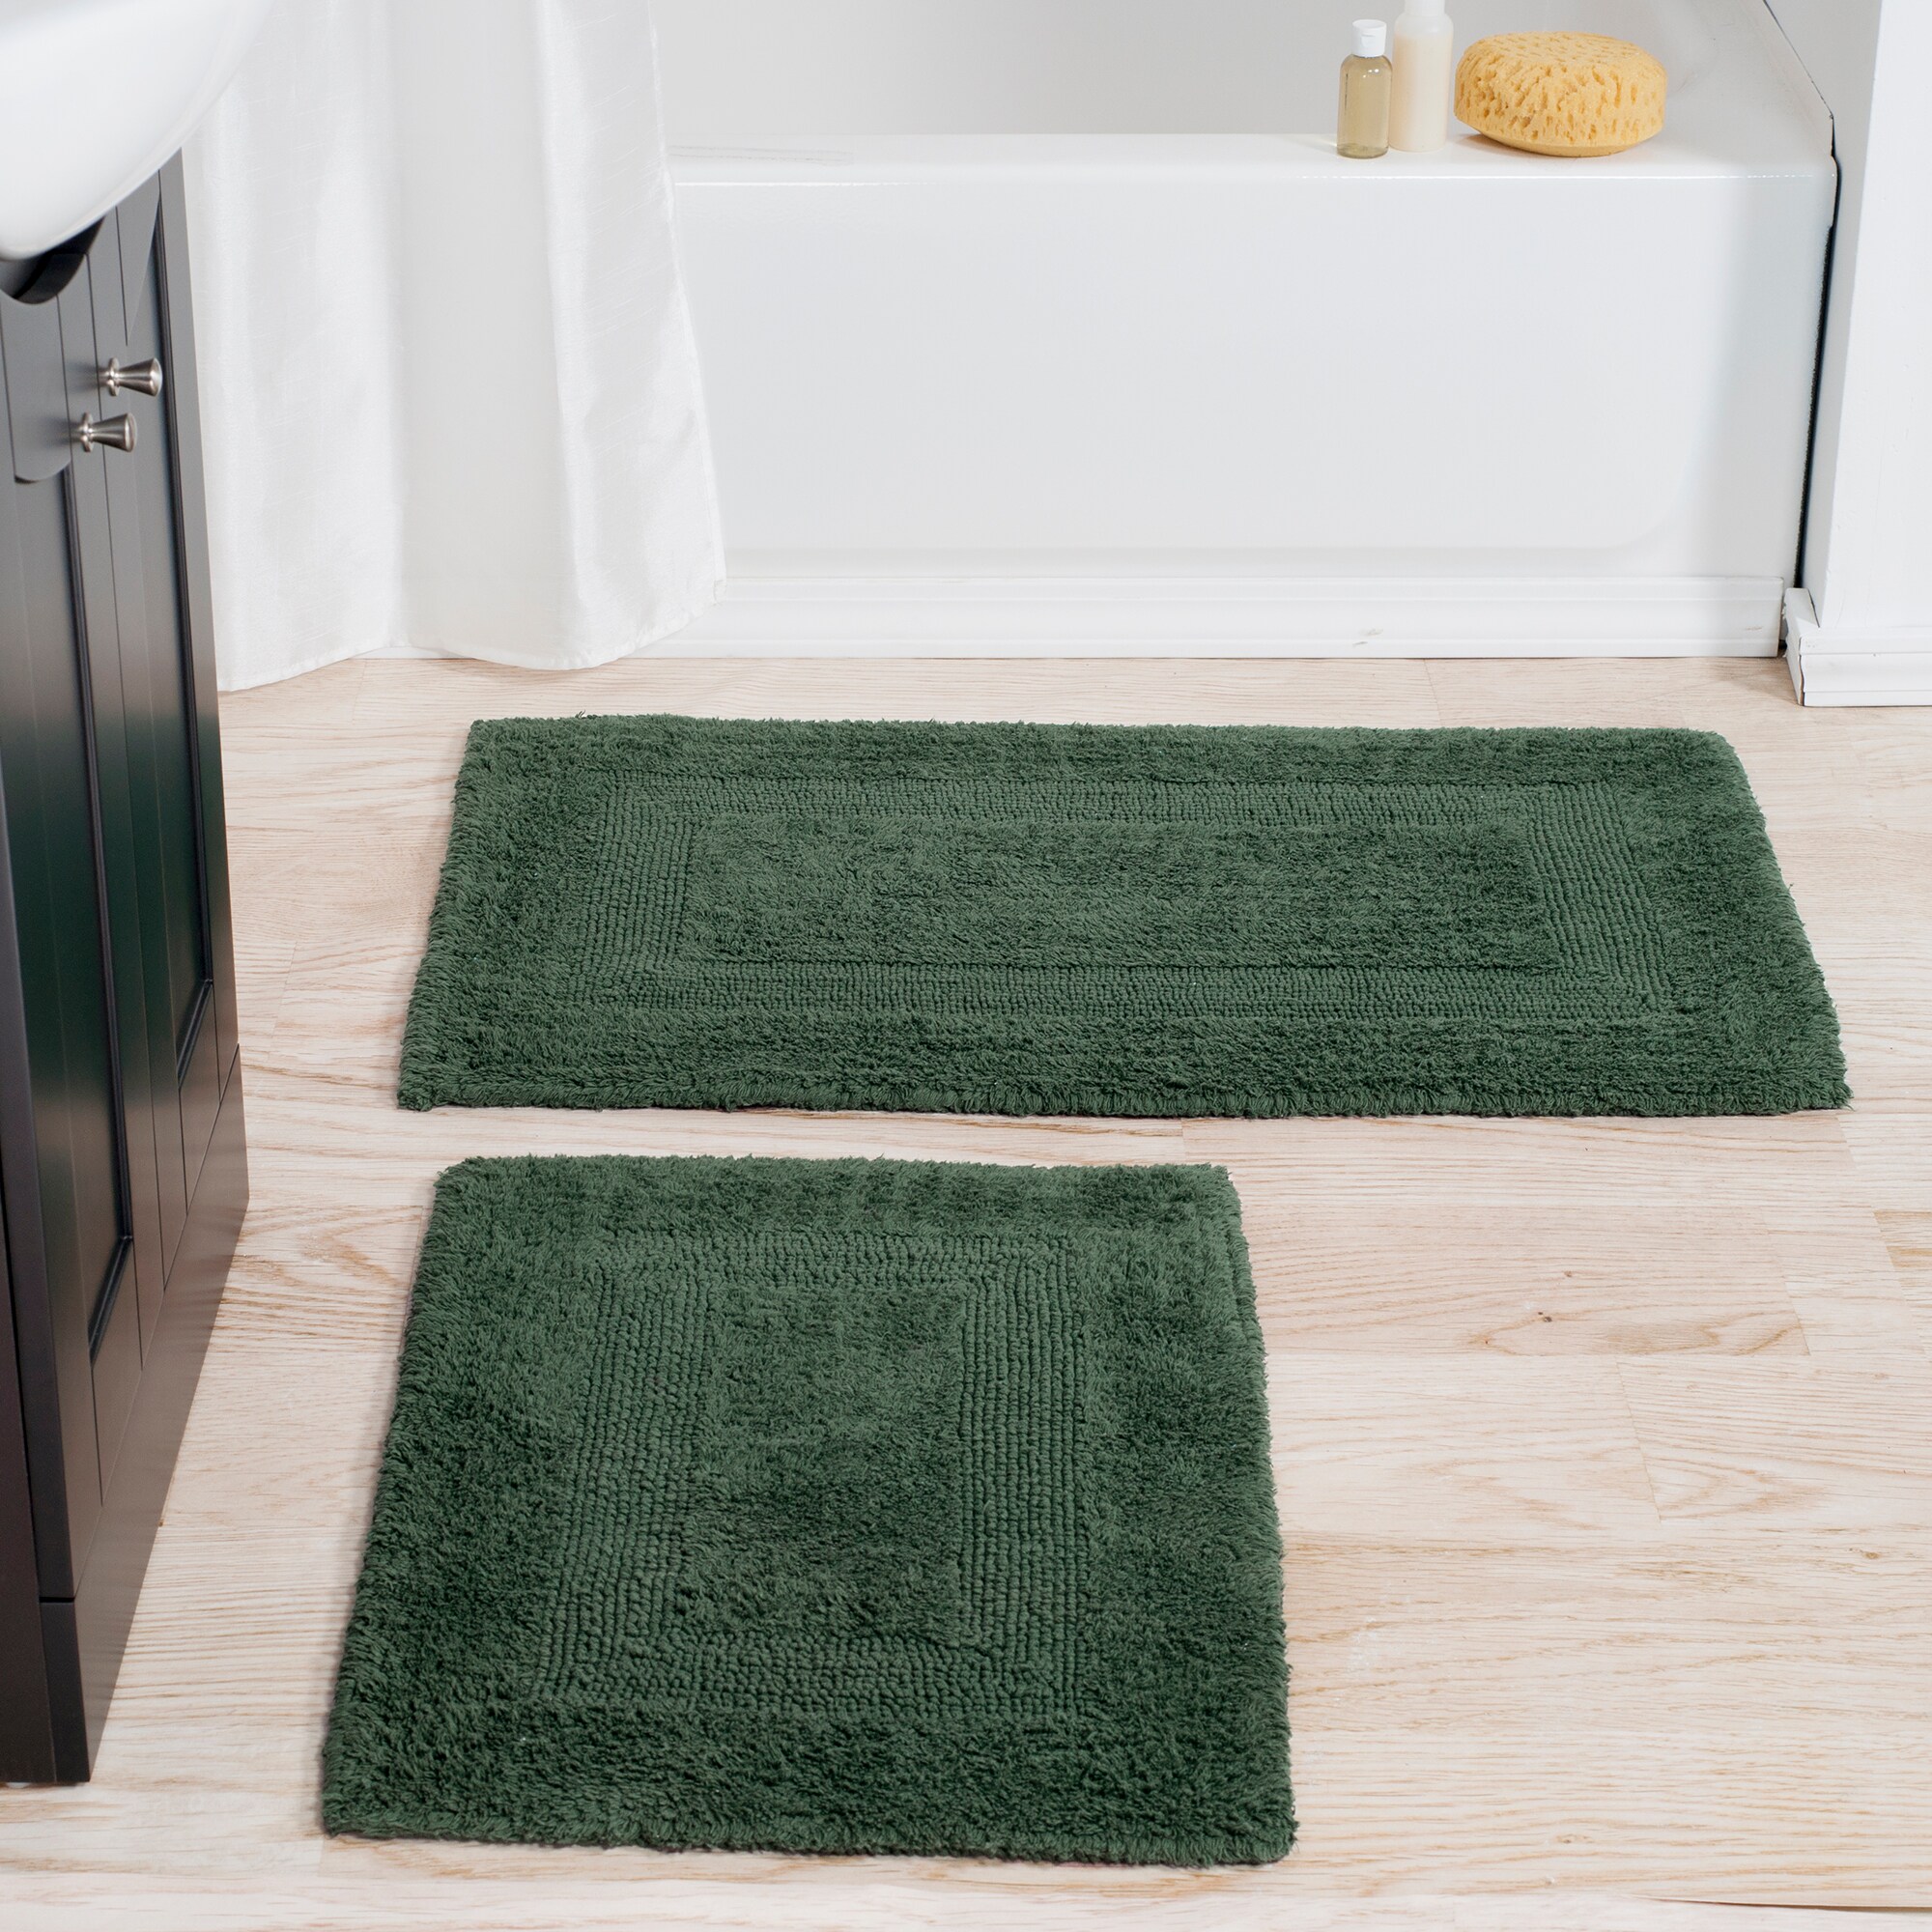 Bath Mat Shower Rug Floor Door Carpet forest animal bird holiday decor Non Slip 